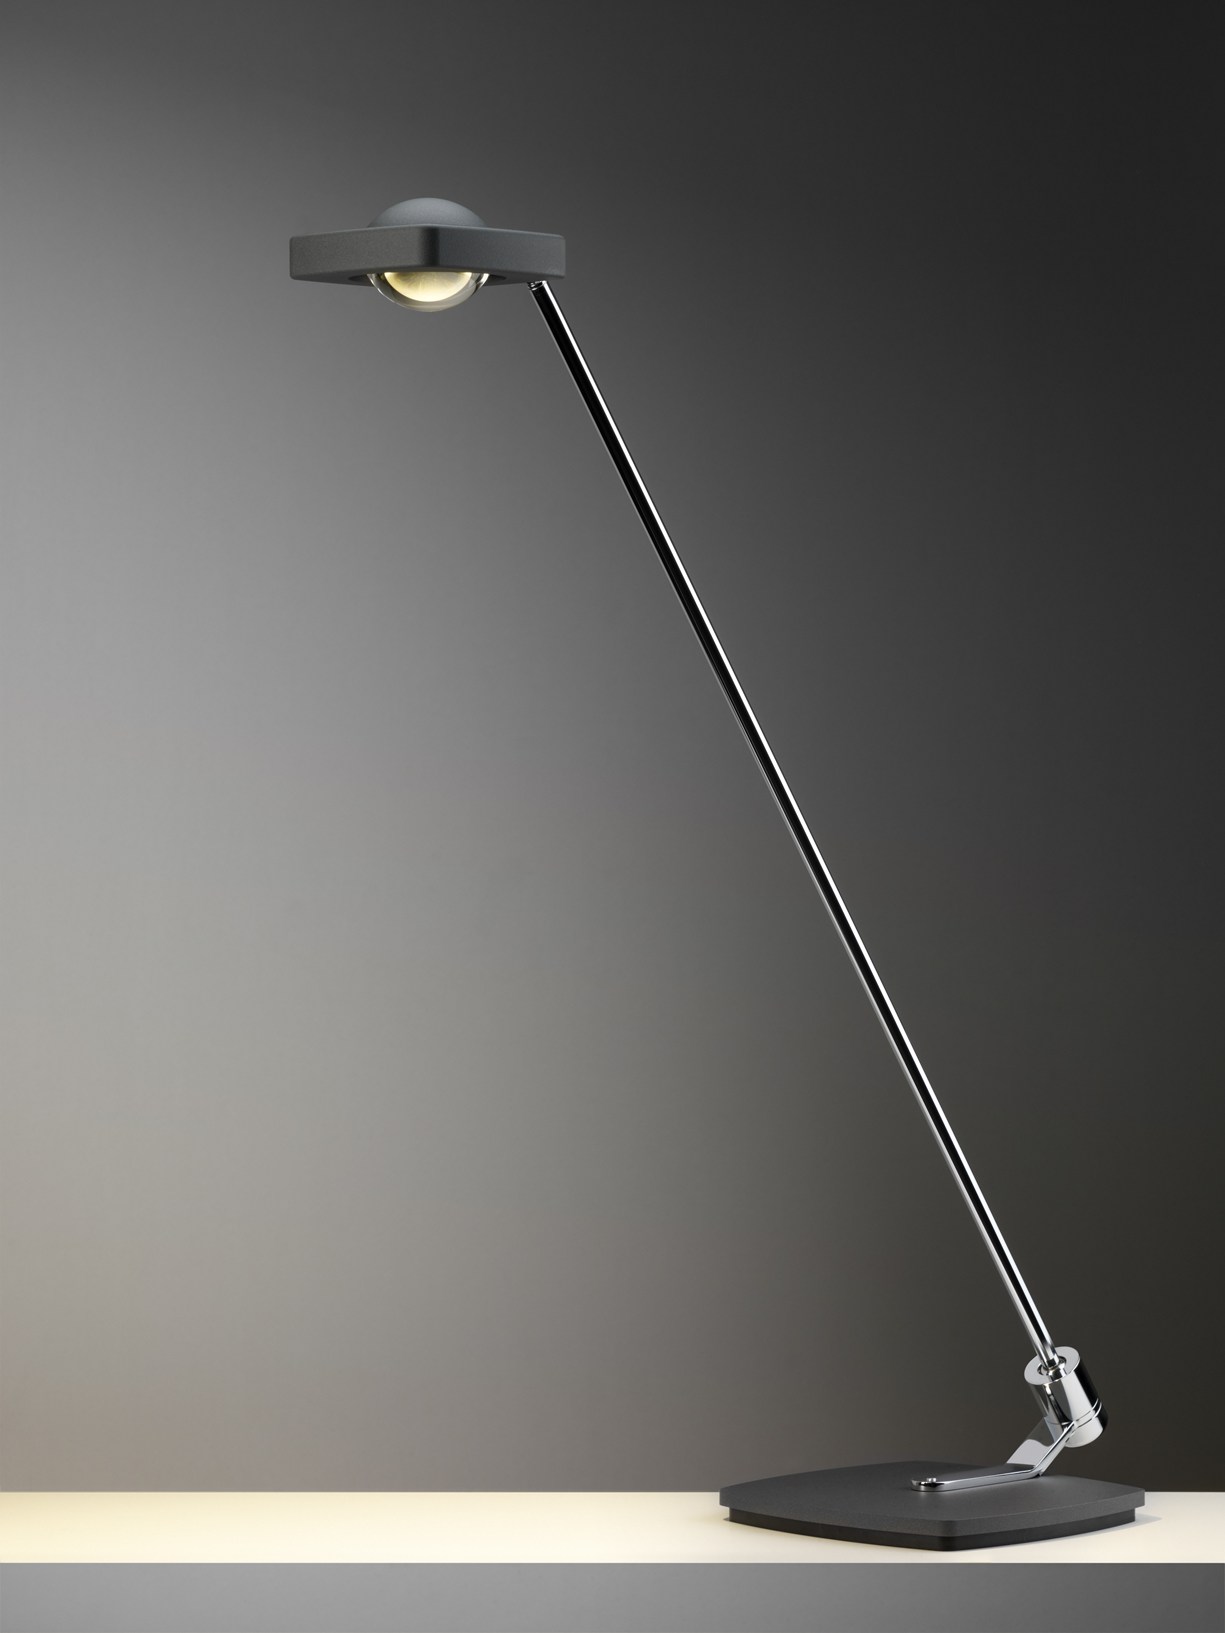 Kelveen Lamp by Oligo